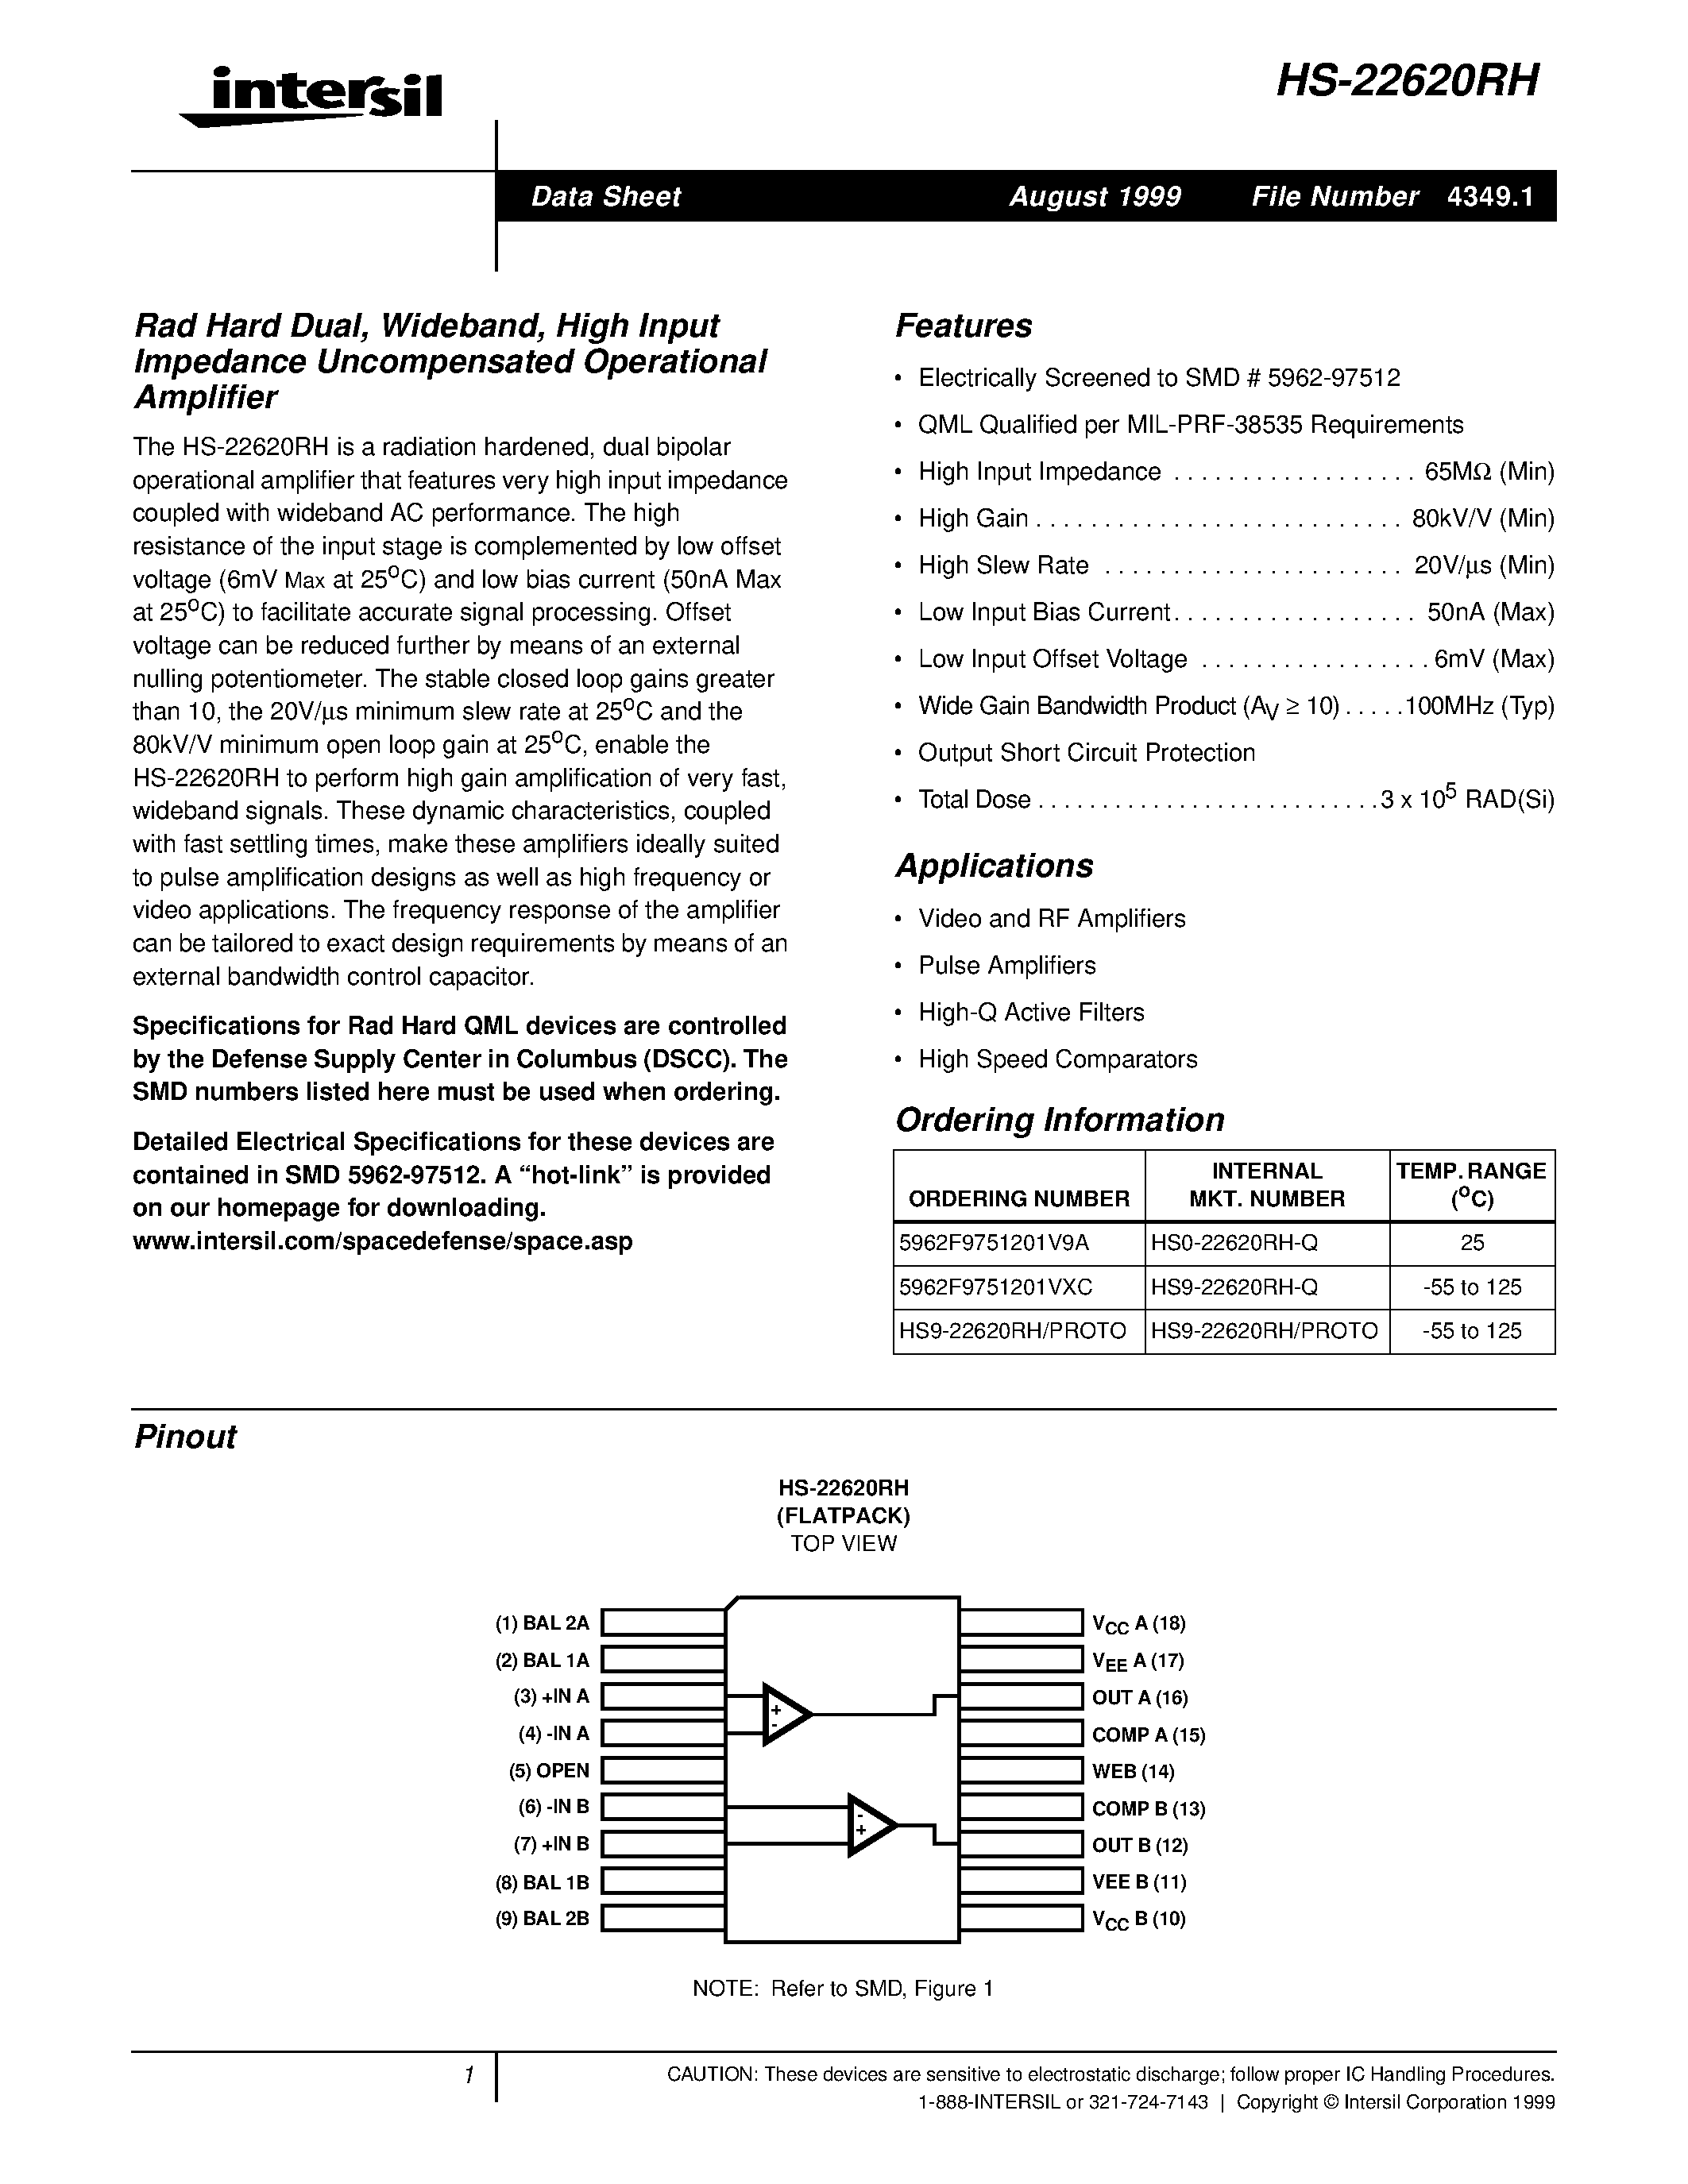 Даташит HS0-22620RH-Q-Rad Hard Dual/ Wideband/ High Input Impedance Uncompensated Operational Amplifier страница 1